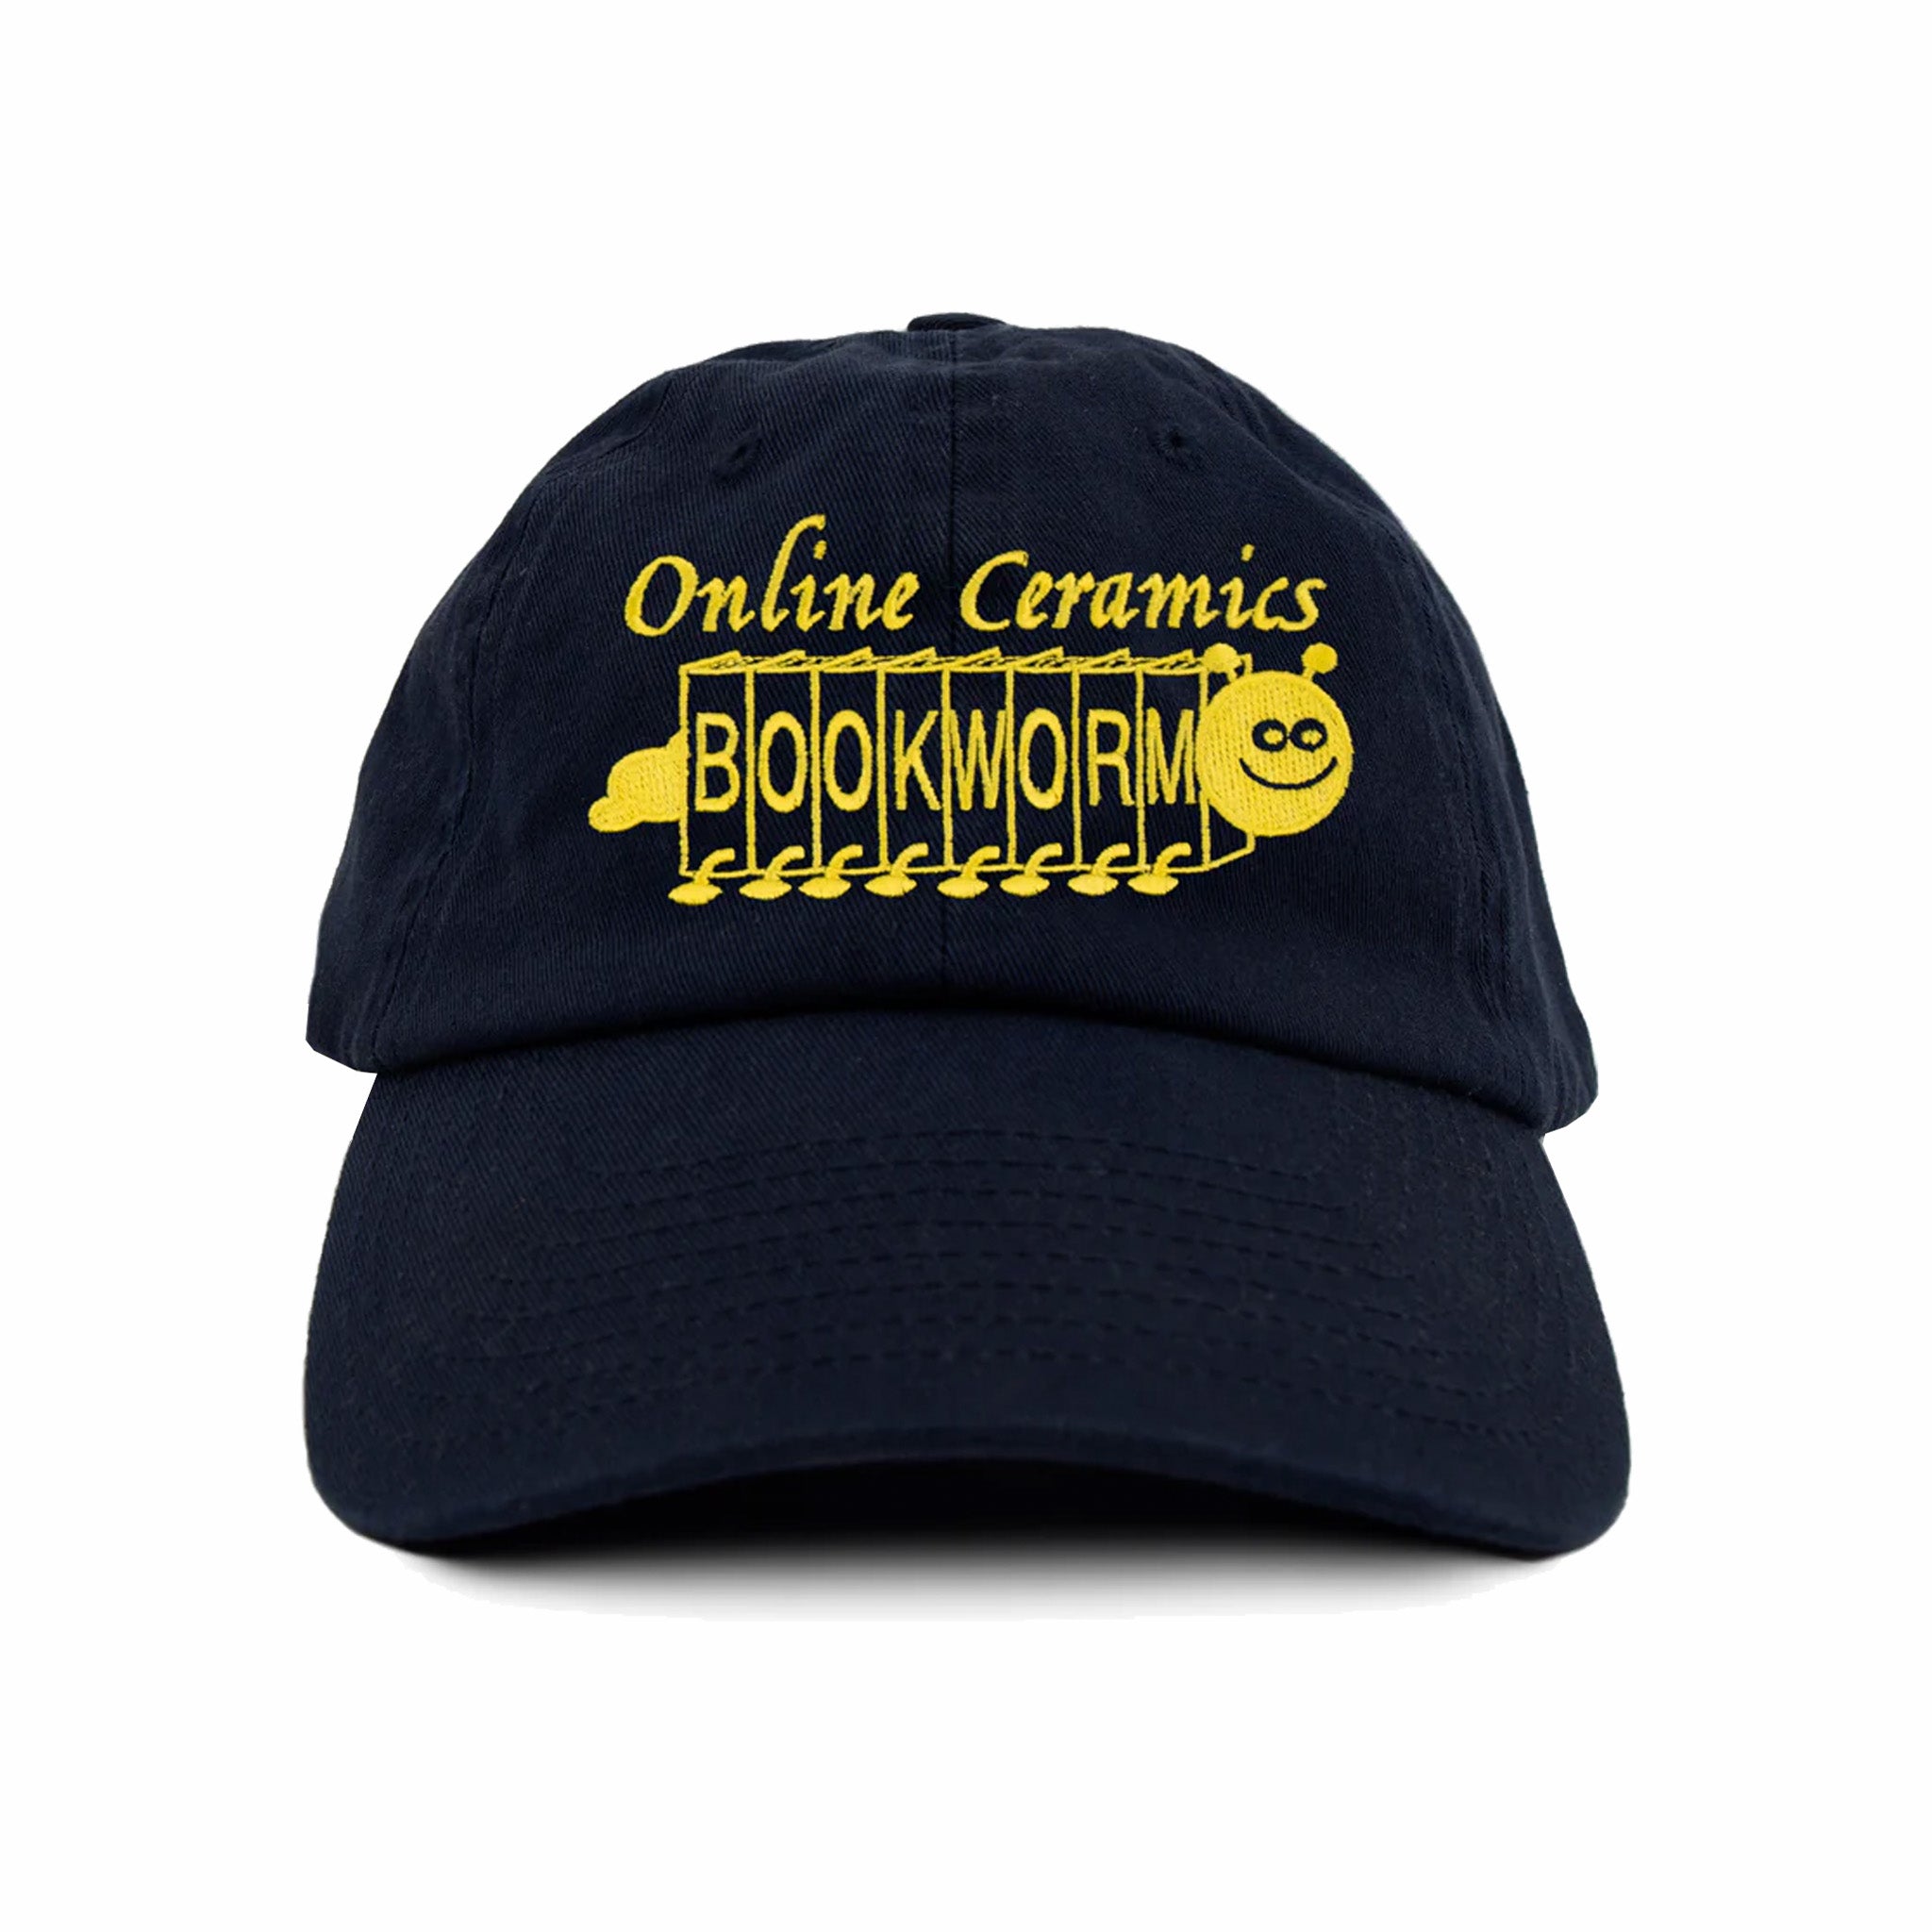 Online Ceramics Bookworm Hat (Navy) - August Shop